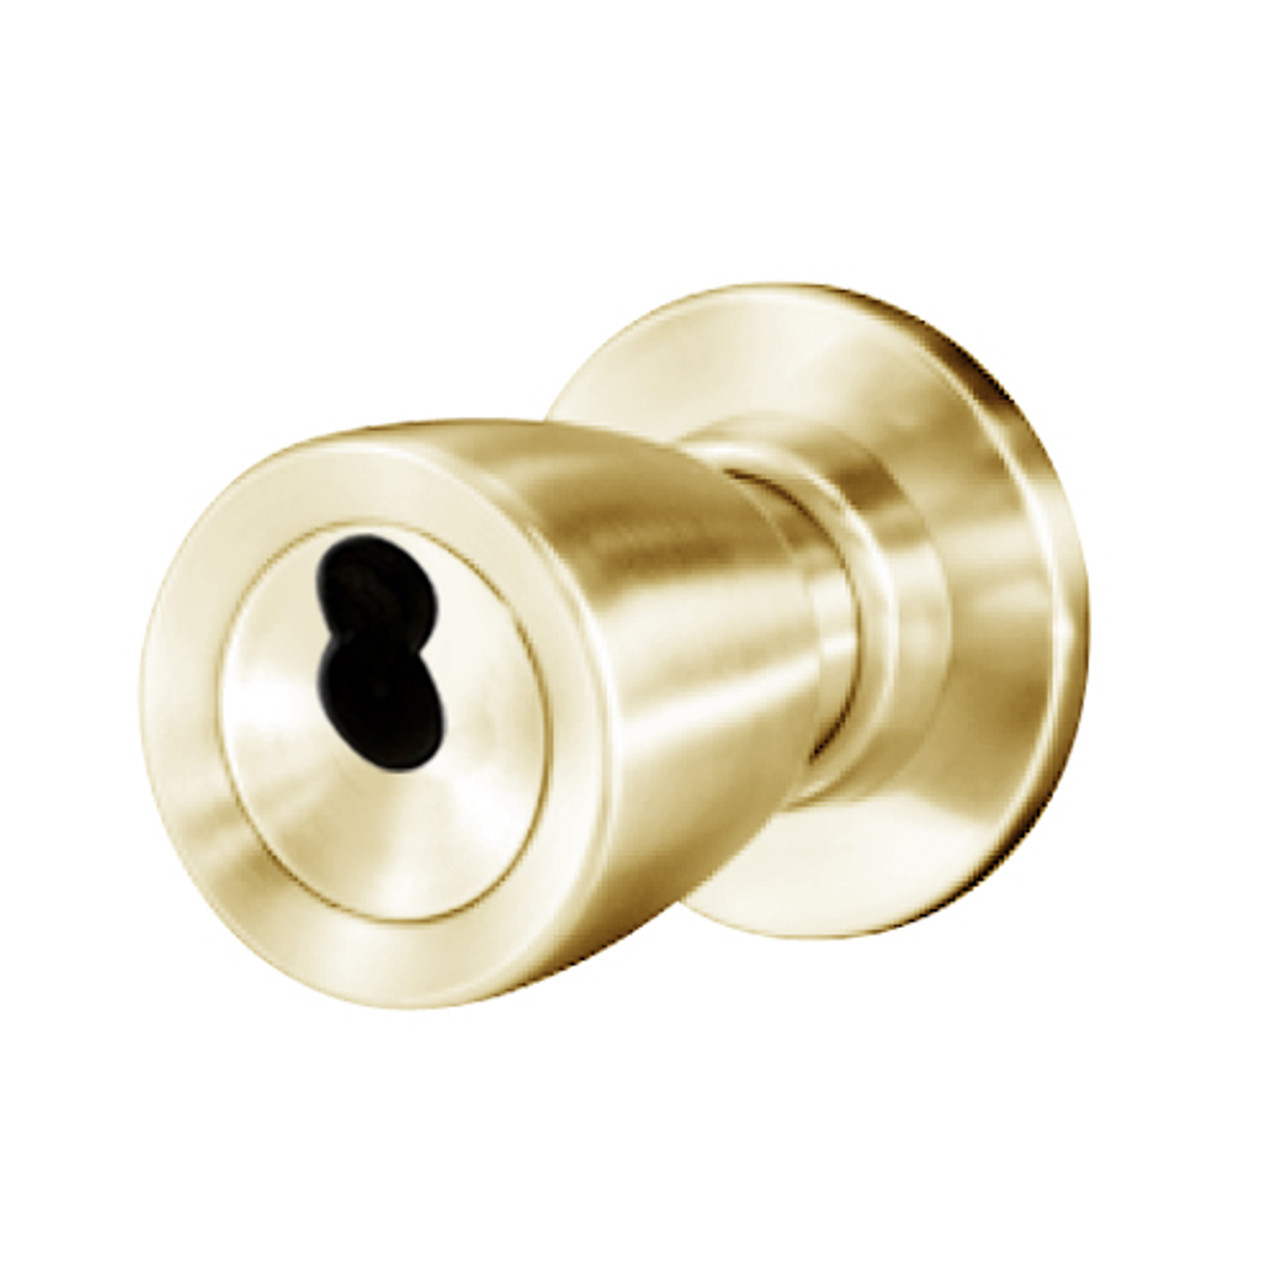 8K57YR6CS3606 Best 8K Series Exit Heavy Duty Cylindrical Knob Locks with Tulip Style in Satin Brass